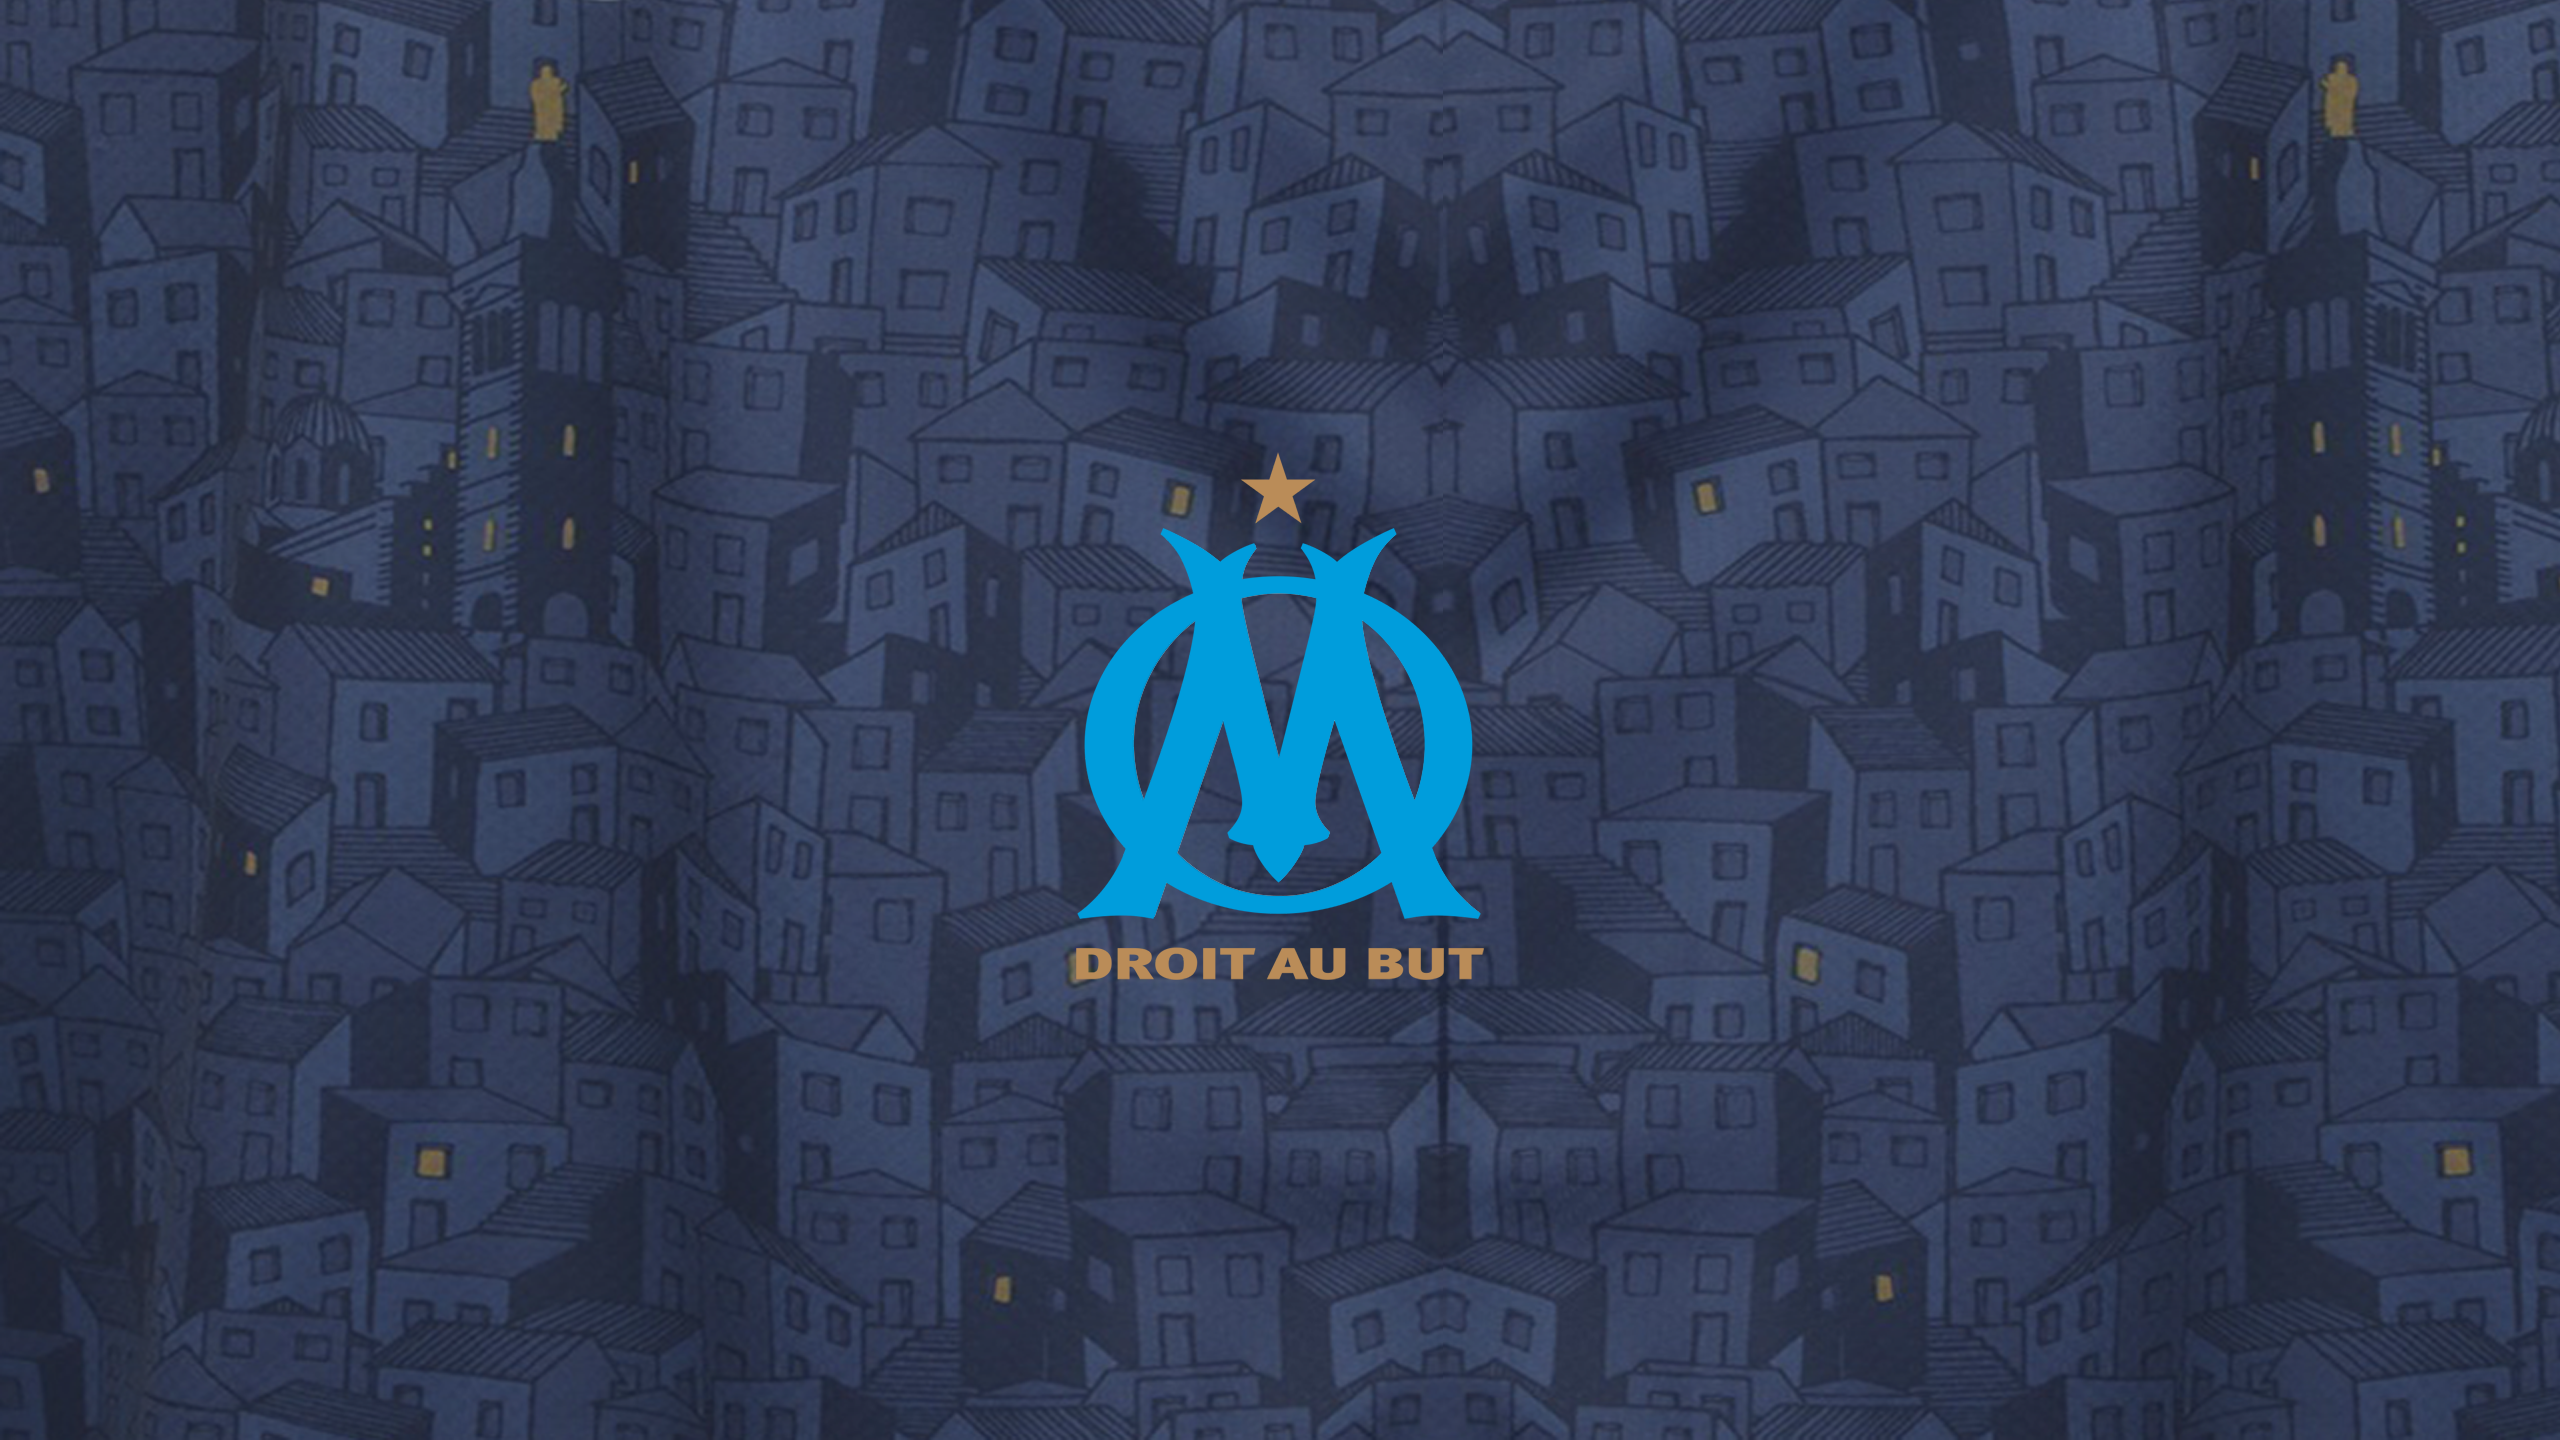 Olympique De Marseille Wallpapers